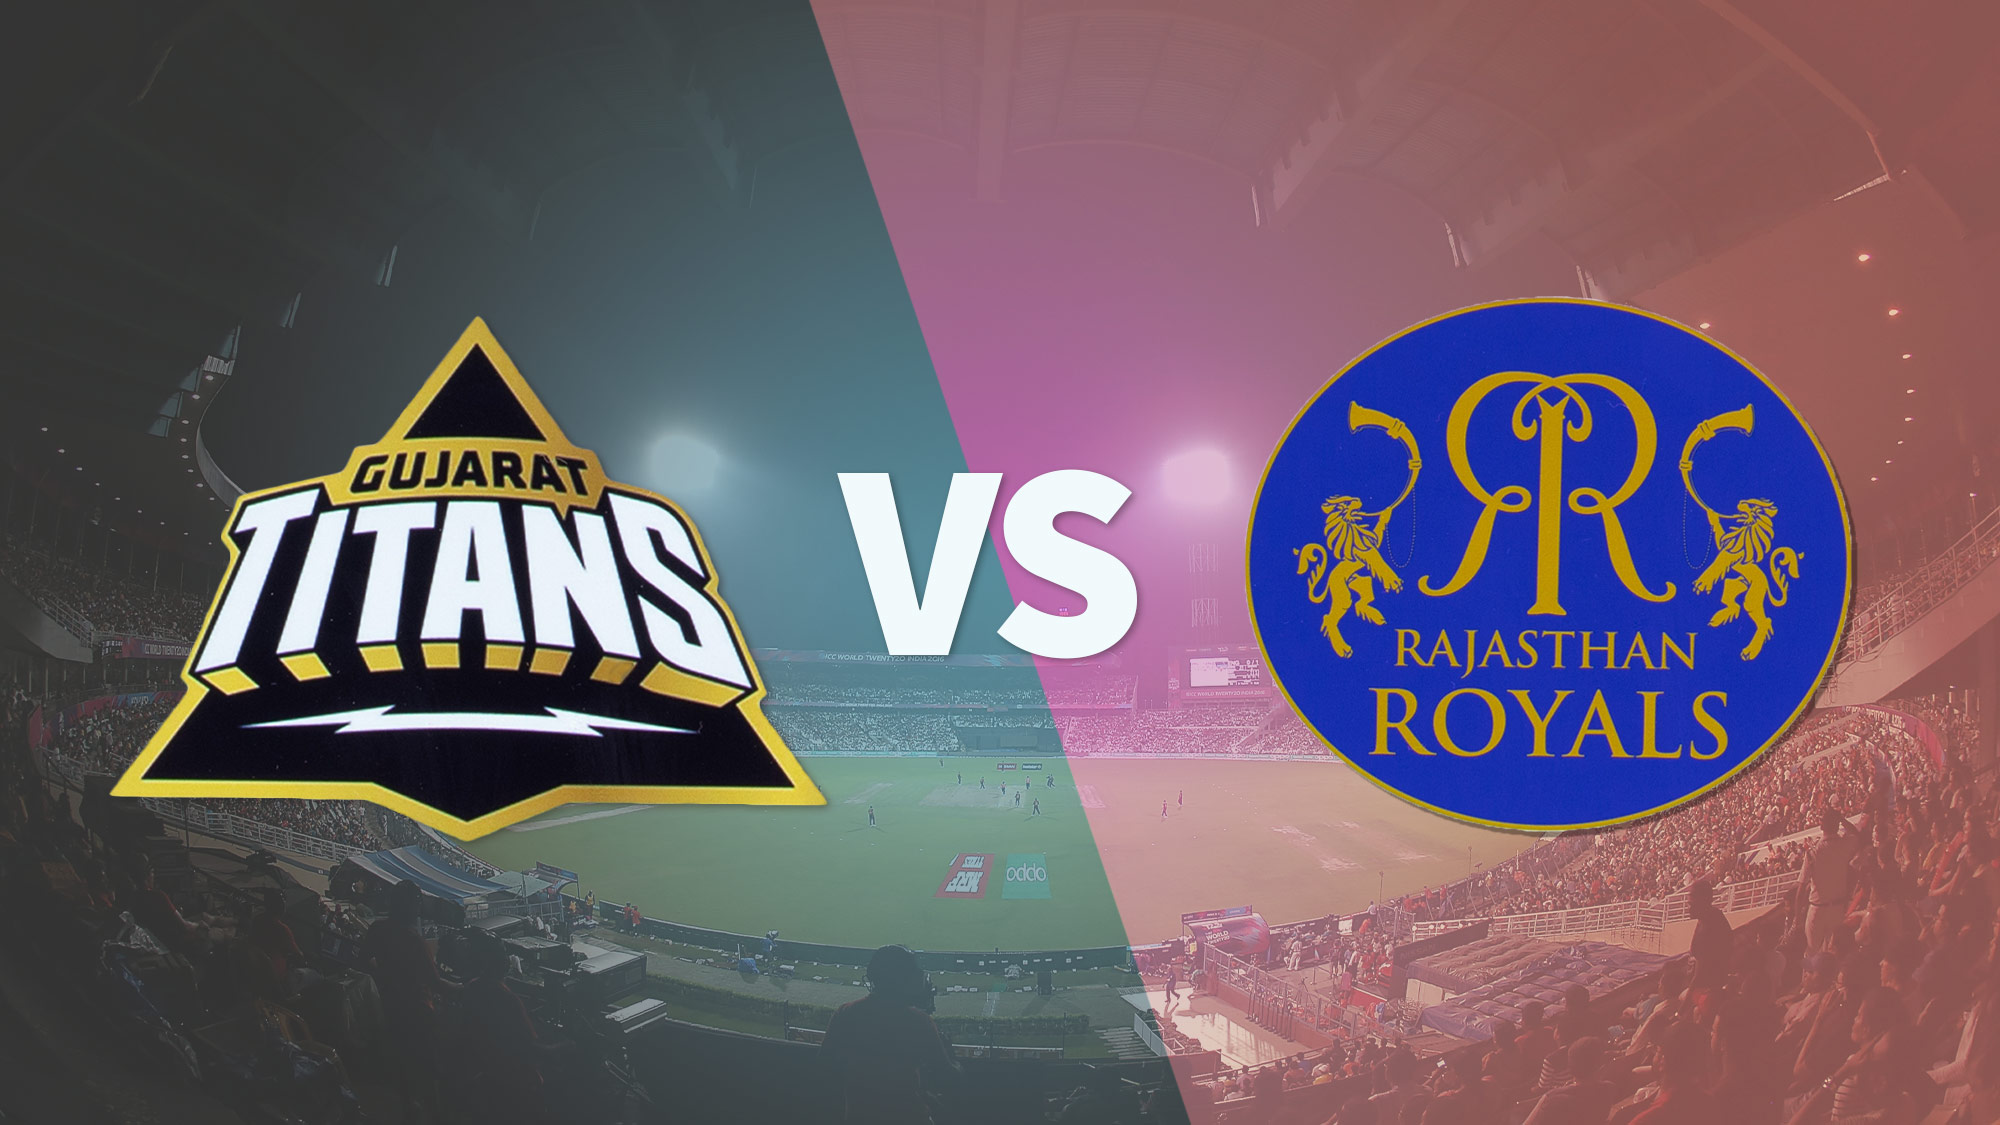 The Gujarat Titans and Rajasthan Royals logo against a backdrop of Eden Gardens stadium in Kolkata, India